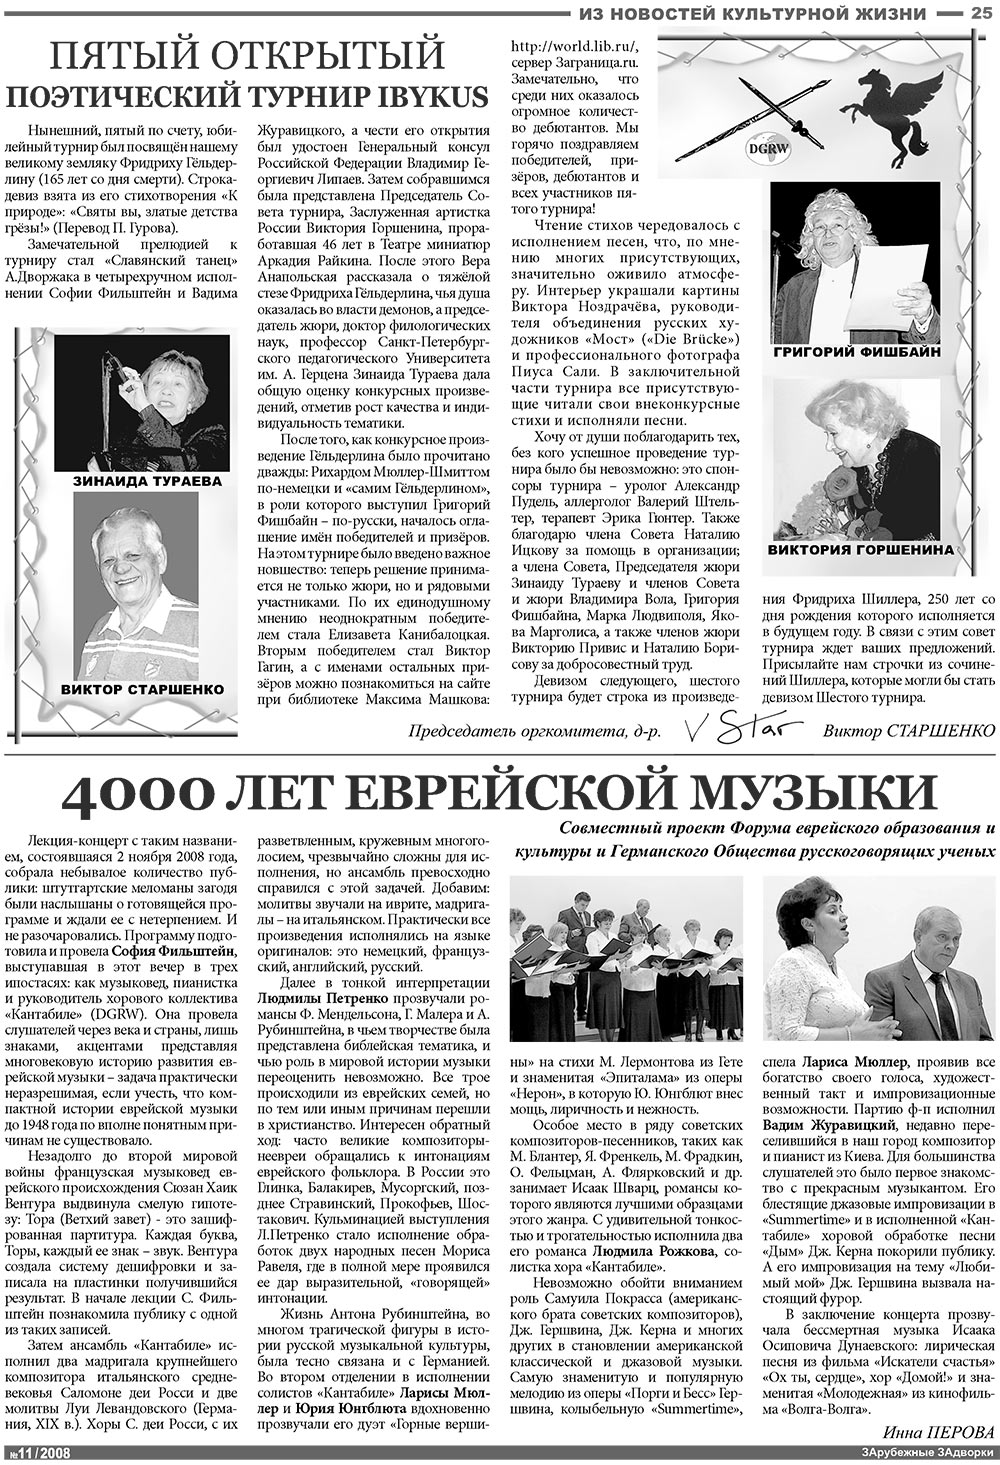 Известия BW (газета). 2008 год, номер 11, стр. 25